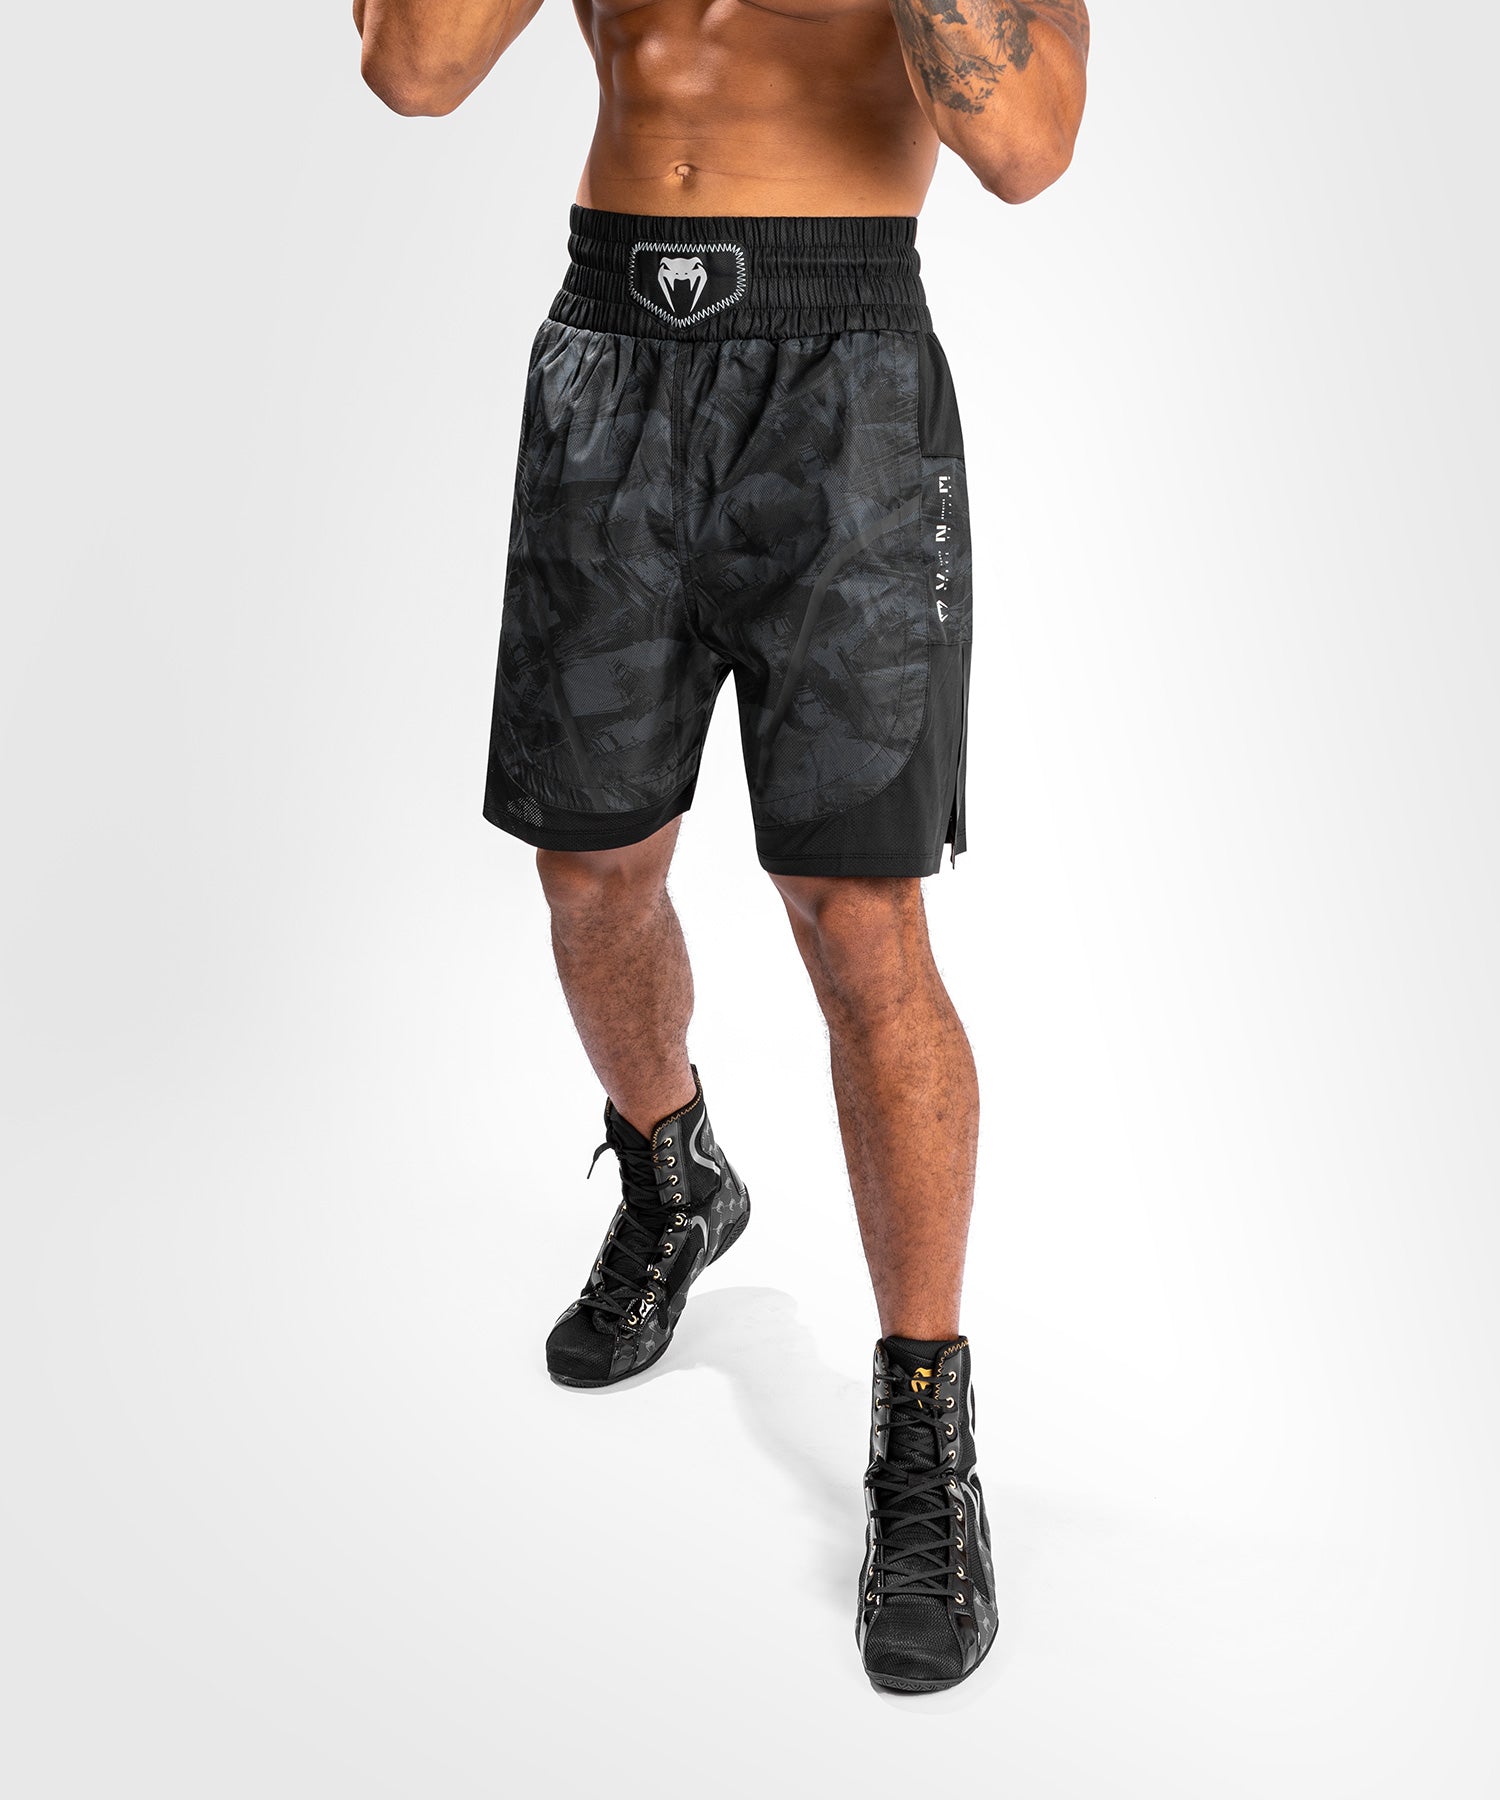 Pantalones de Boxeo Venum Negro Urban Camo